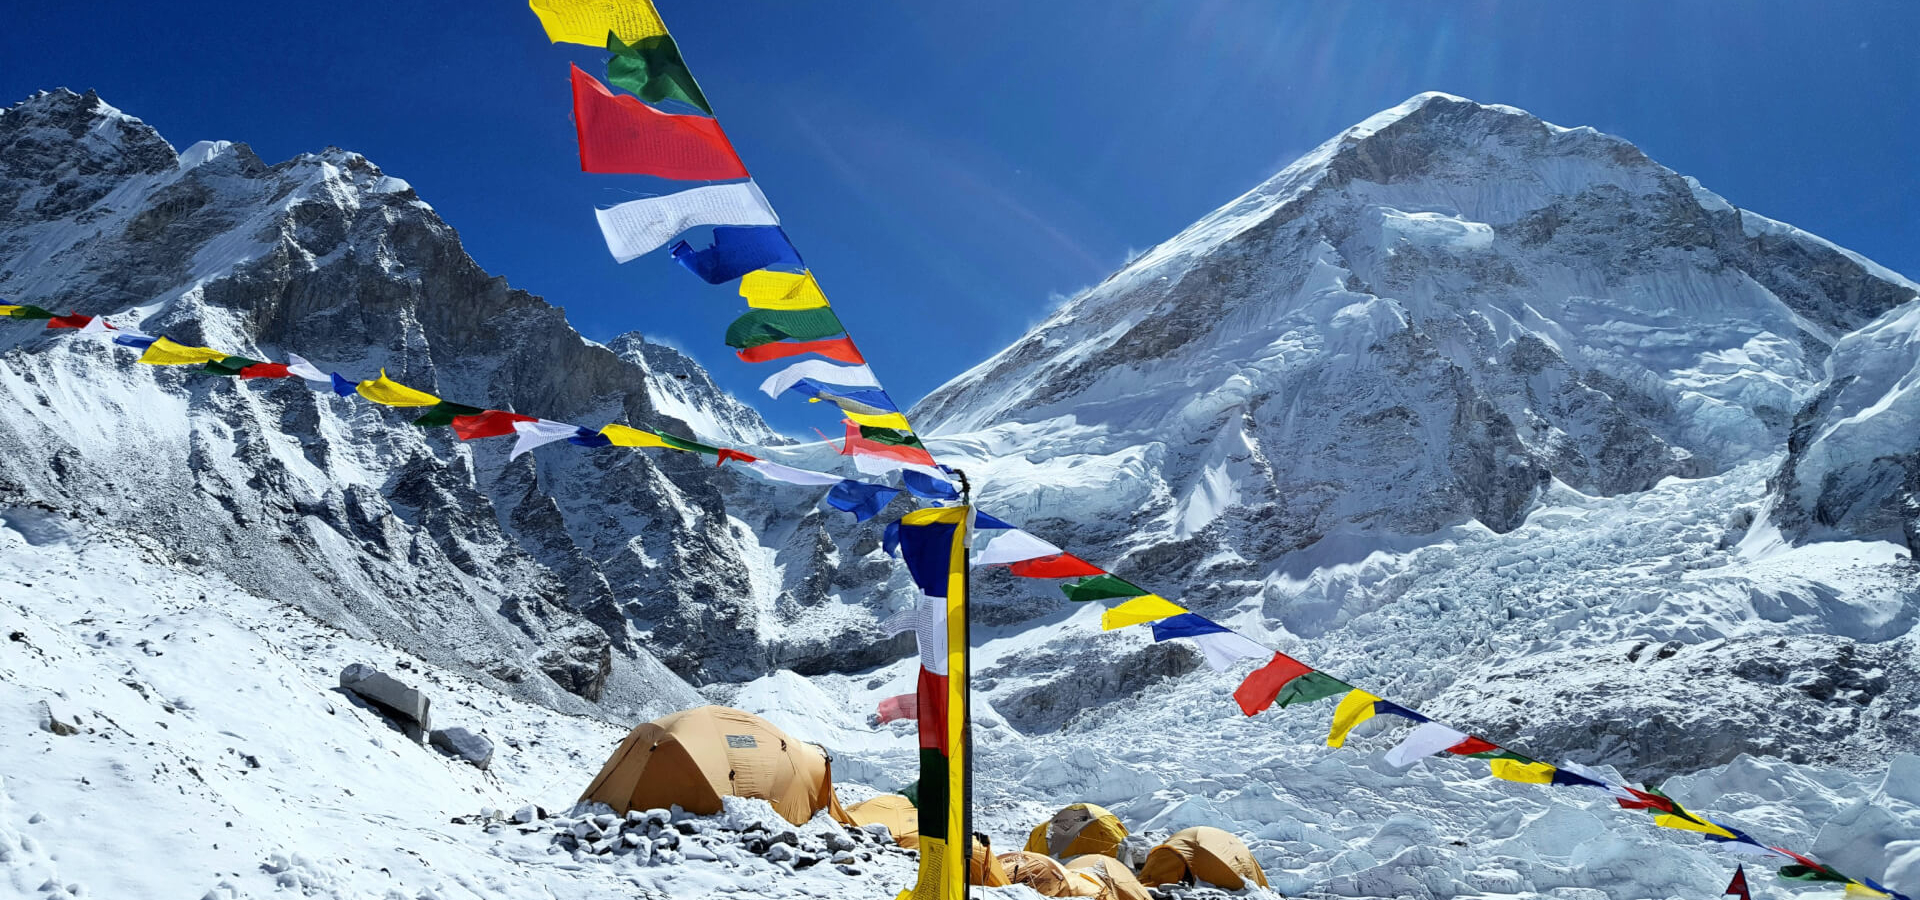 Mount Everest Image - Everest Base Camp Trek with Hiking Himalayas